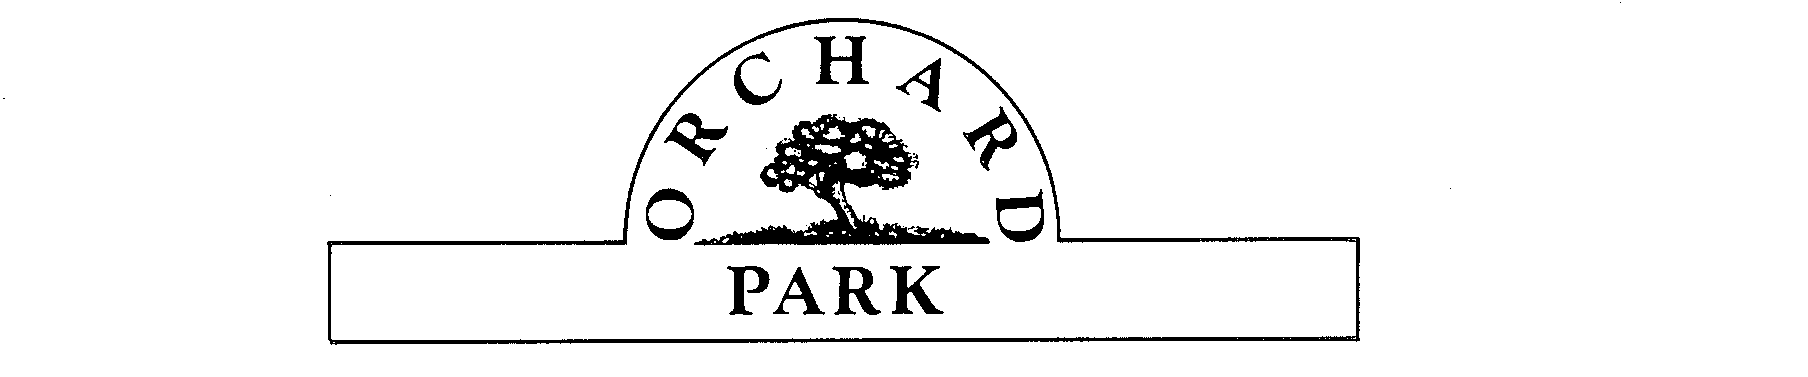 Trademark Logo ORCHARD PARK